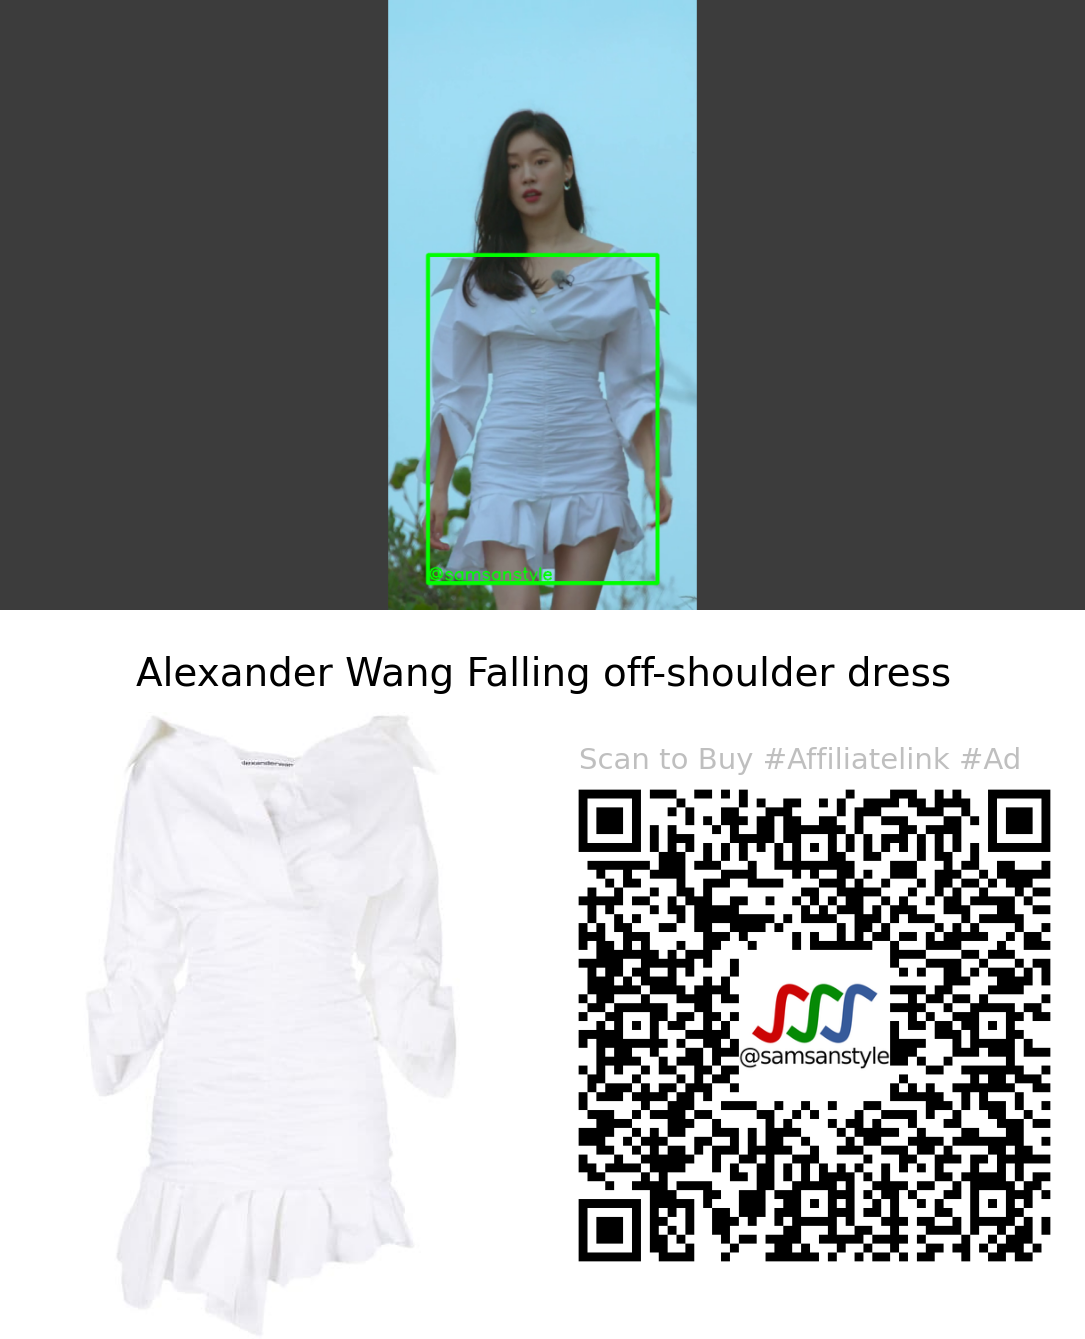 Choi Seoeun | Single’s Inferno Season S02E01 | Alexander Wang Falling off-shoulder dress